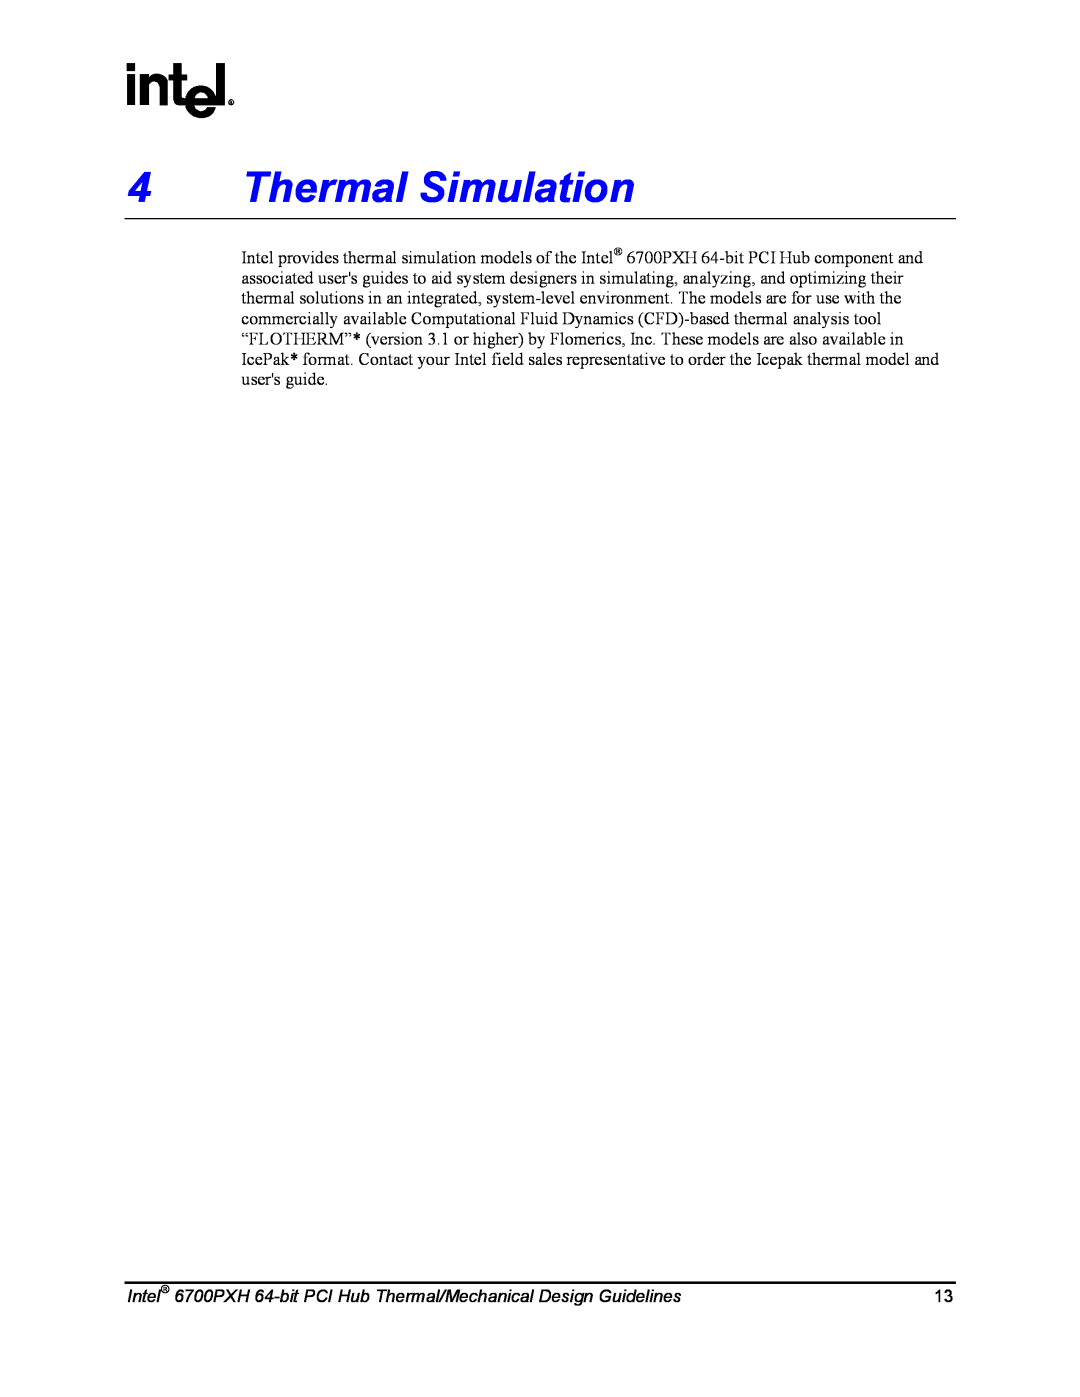 Intel manual Thermal Simulation, Intel 6700PXH 64-bit PCI Hub Thermal/Mechanical Design Guidelines 